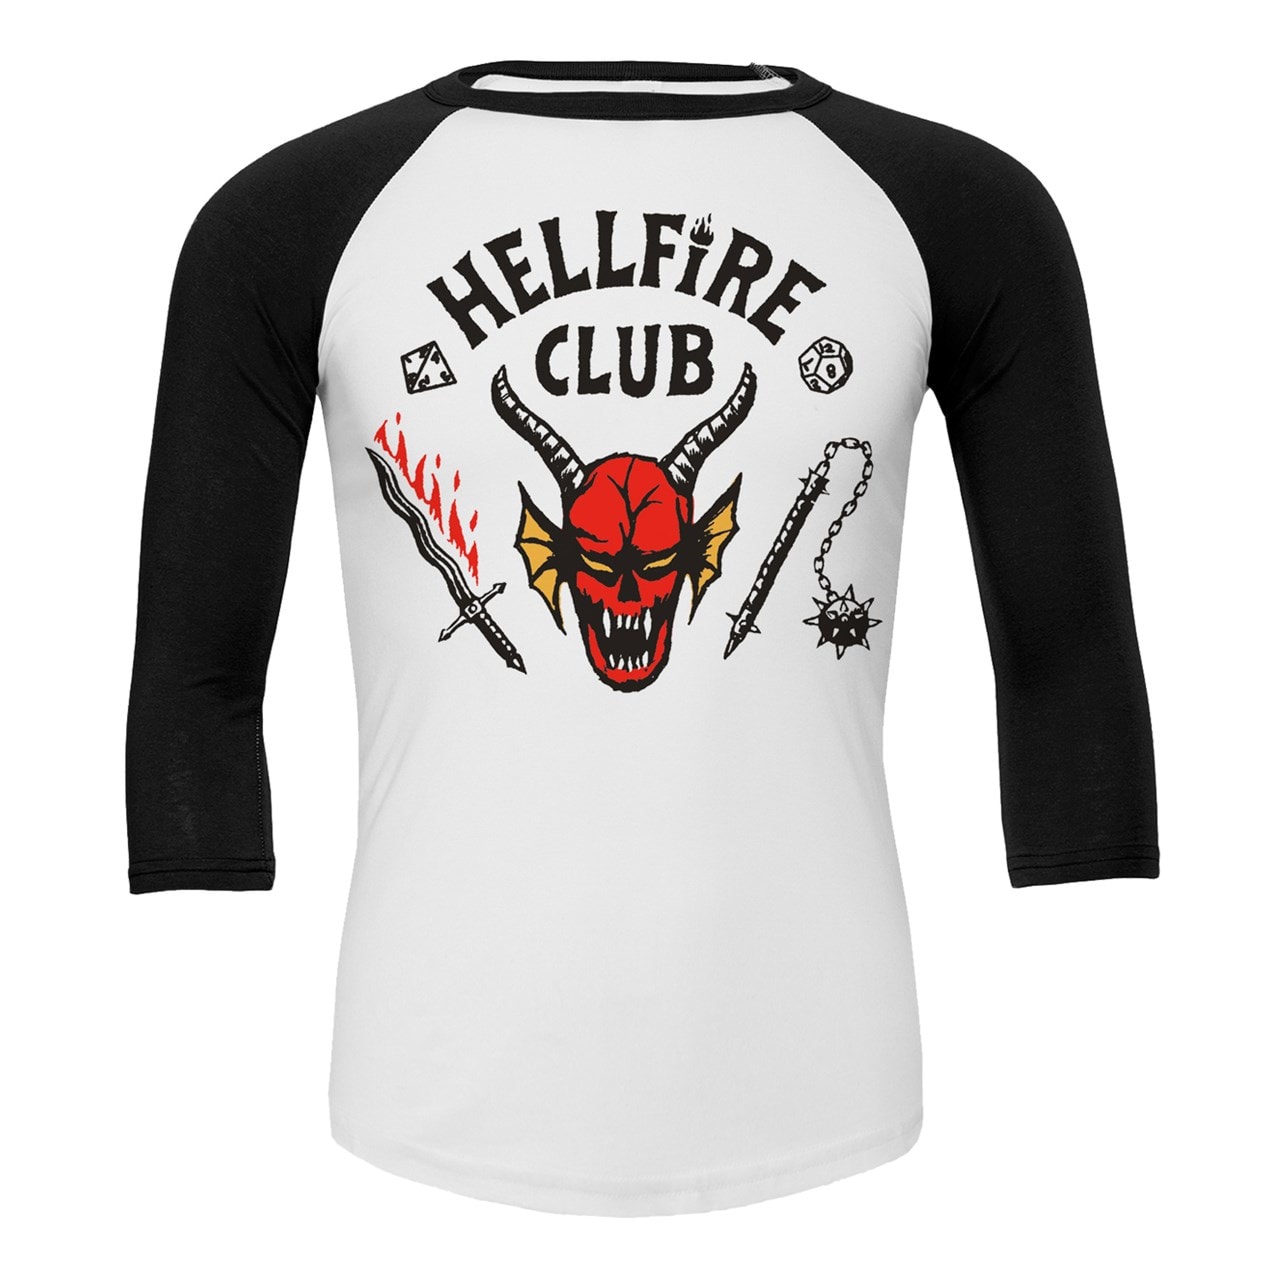 Hellfire Club T-Shirt for Men & Women | Buy Stranger Things Clothes ...